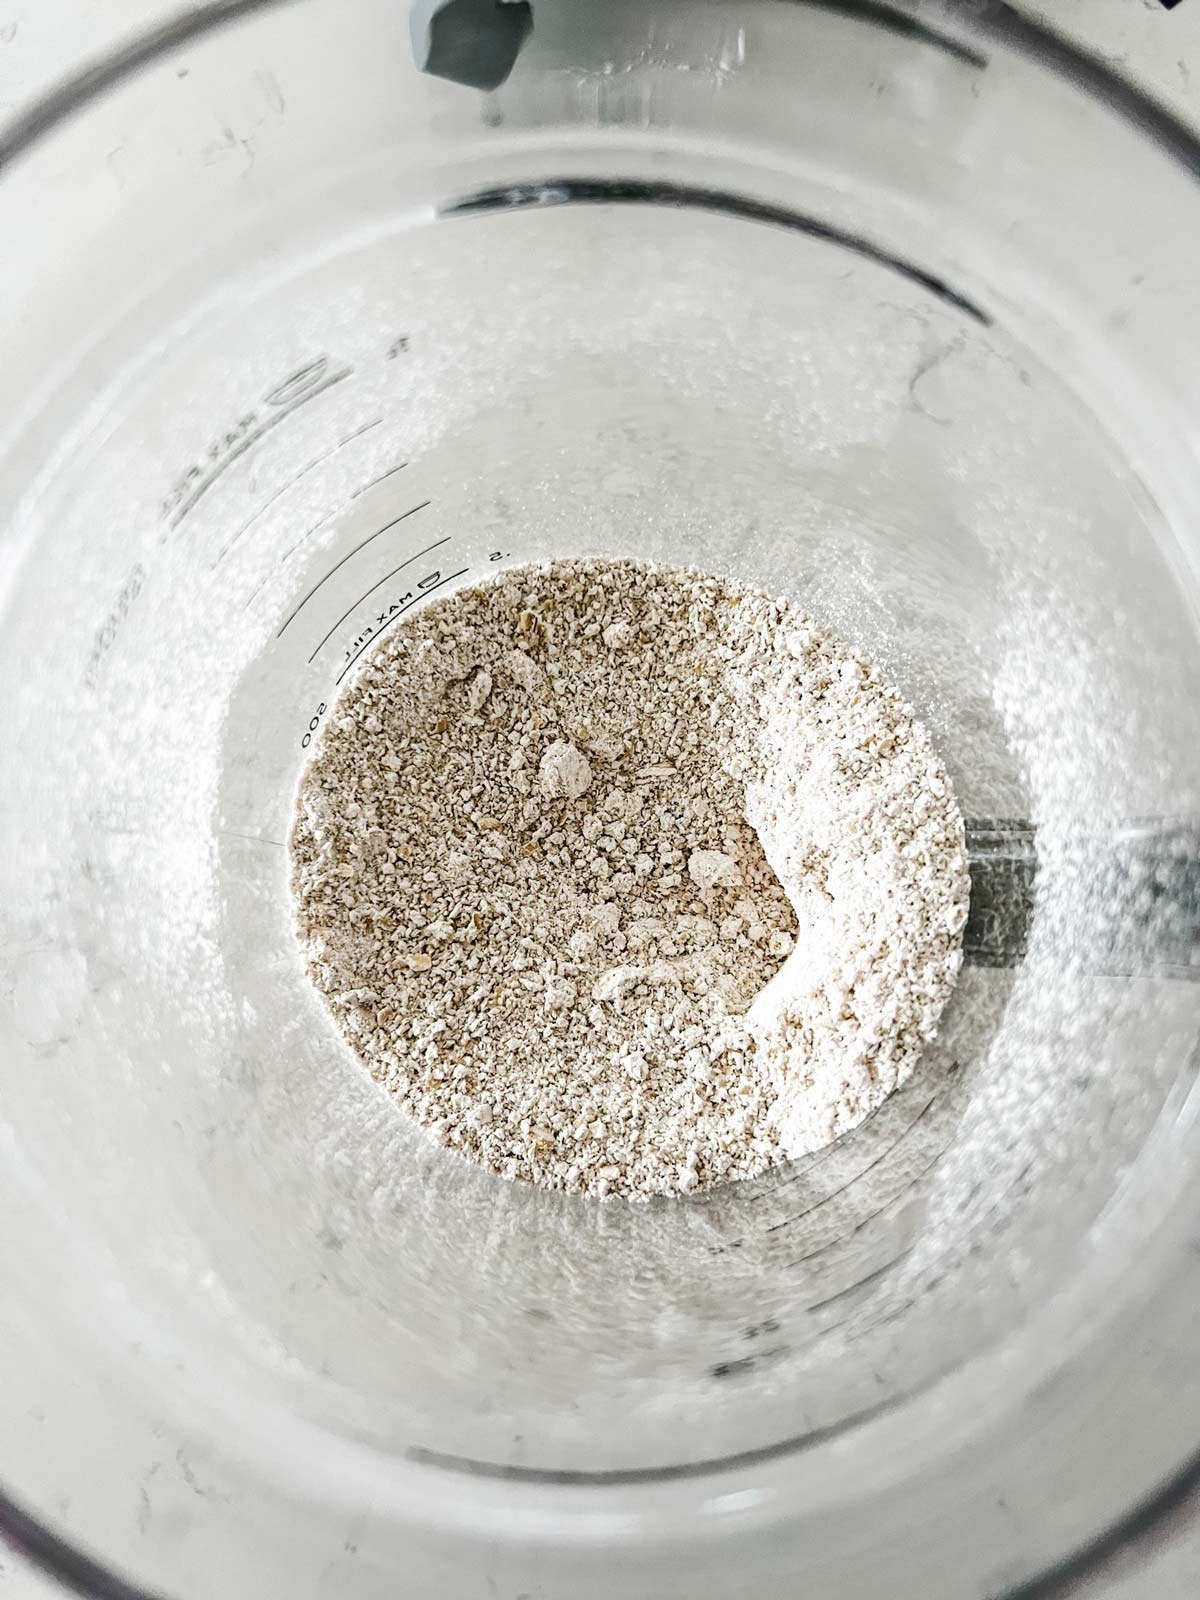 Ground oats that mimic oat flour in a blender.